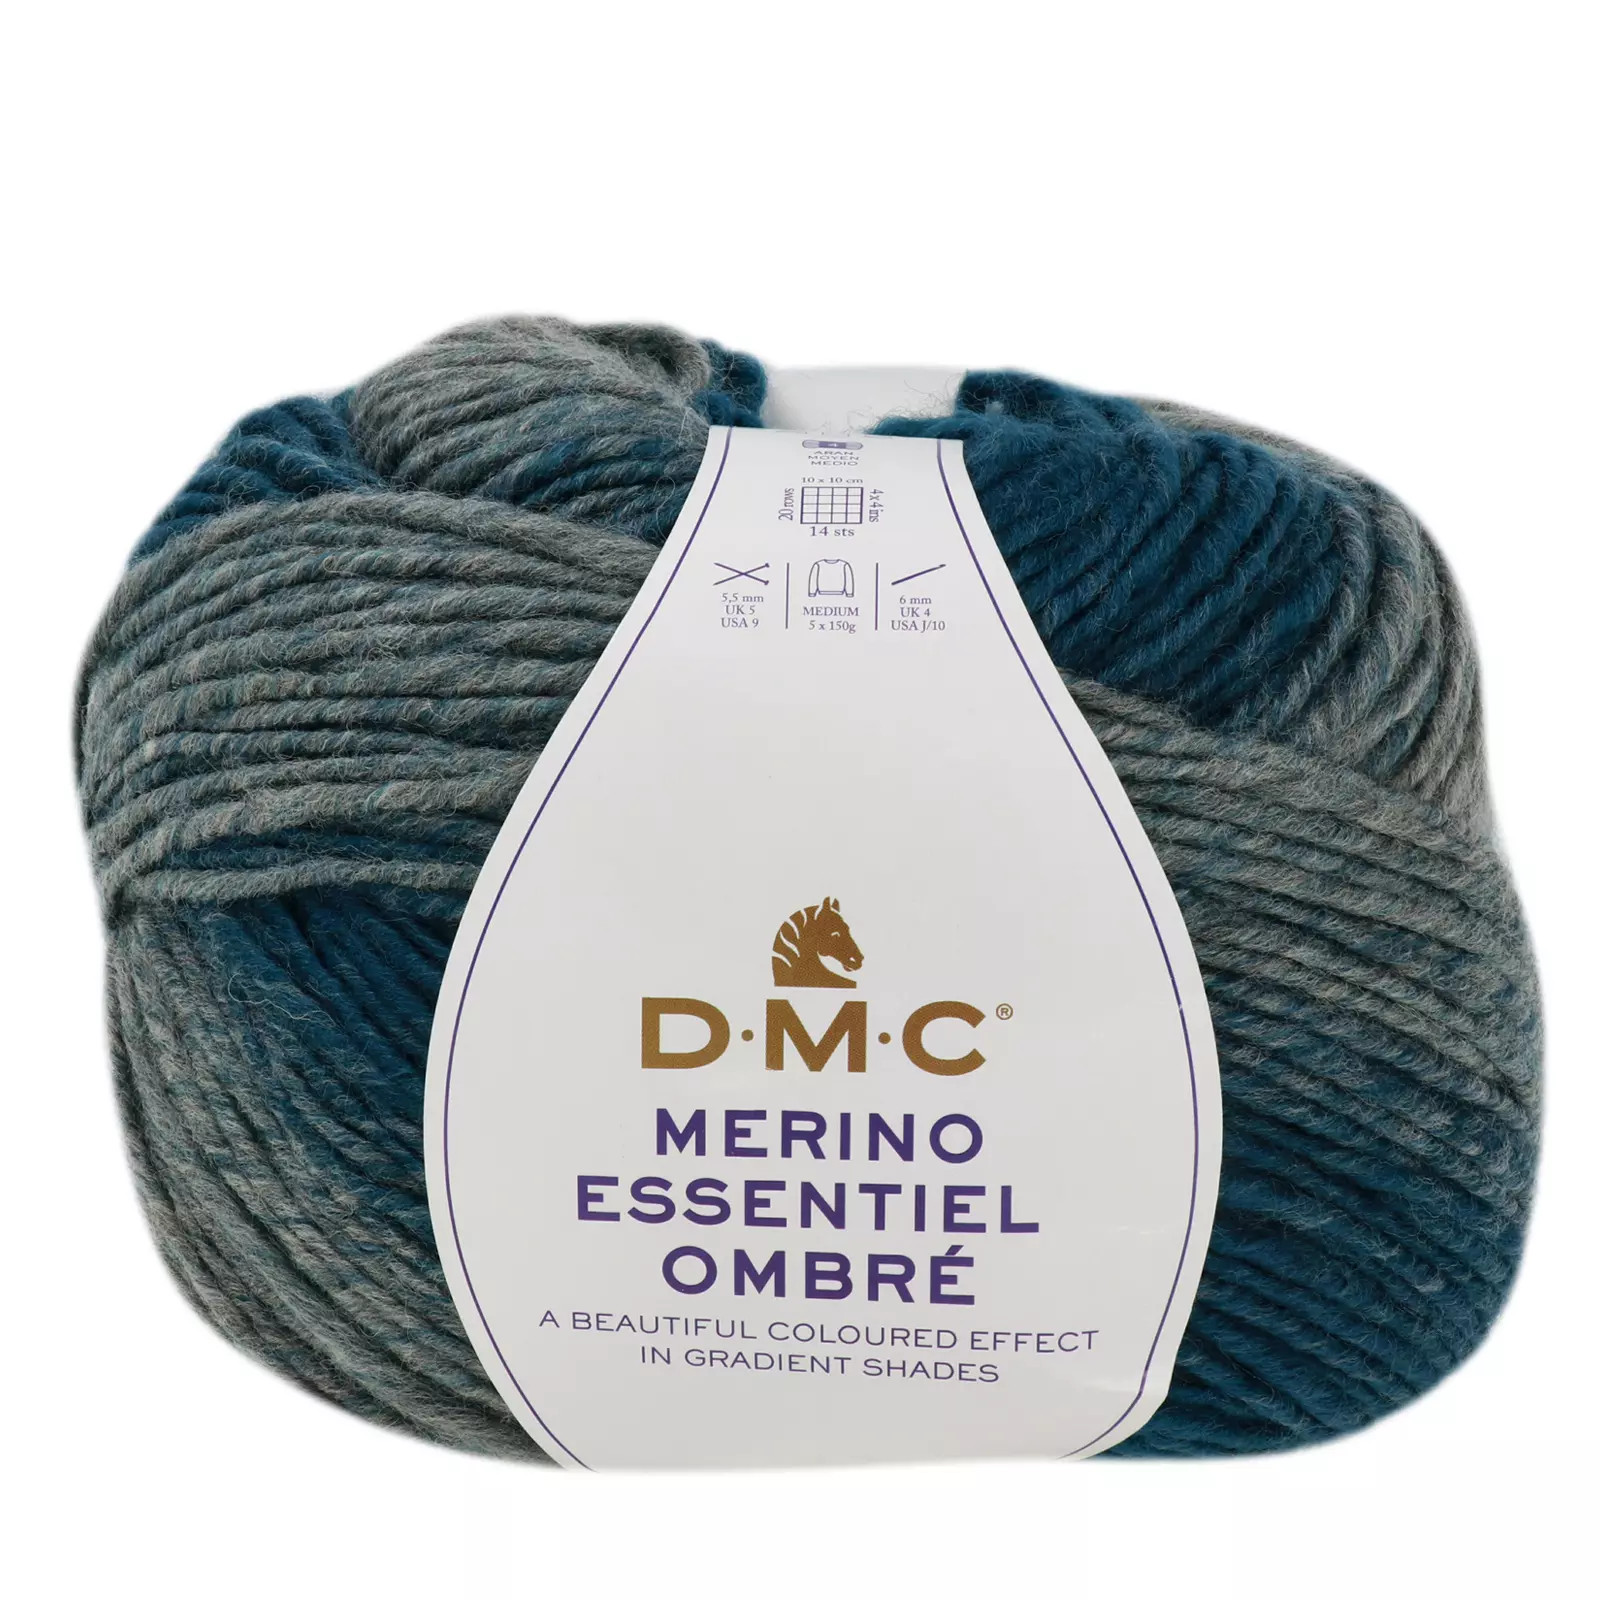 DMC Merino Essentiel Ombre - Foggy night - 1003